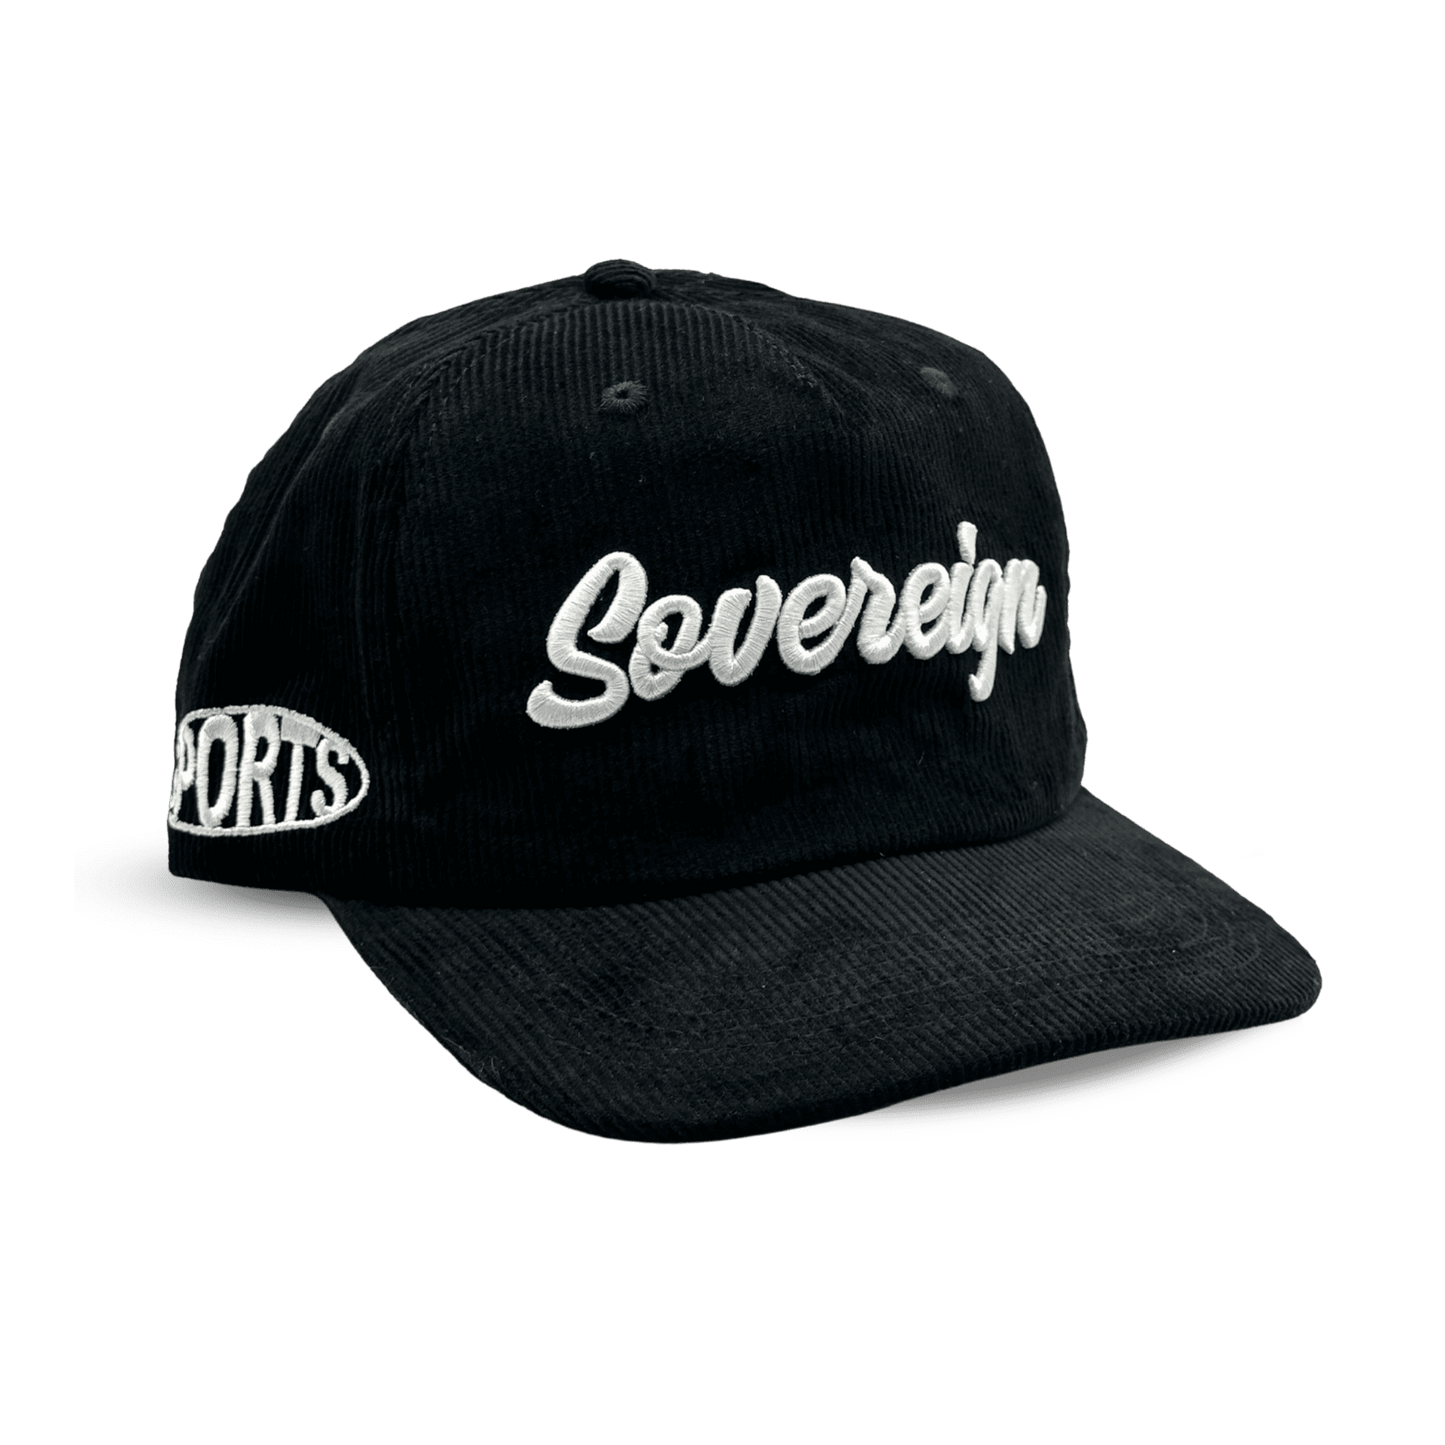 sovereign corduroy vintage hat black sport script, 5 panel retro